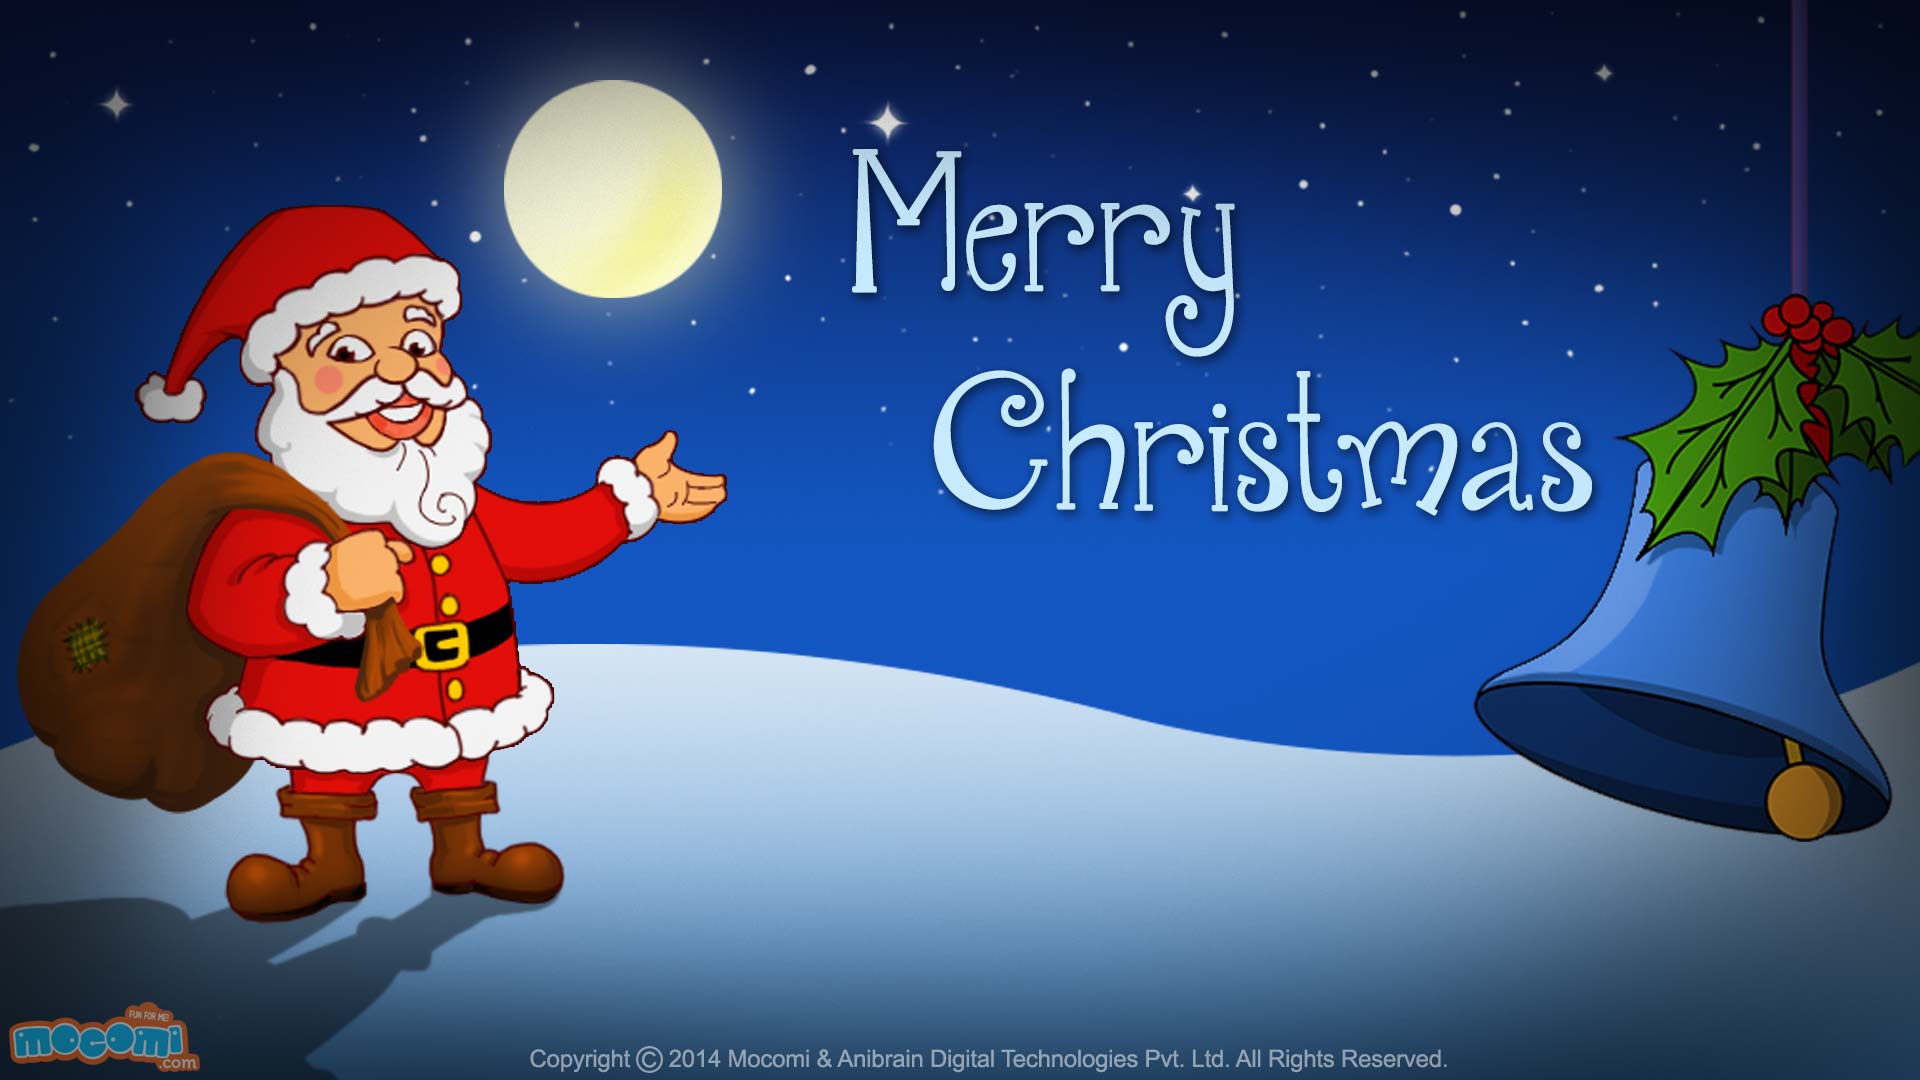 Merry Christmas- Santa Claus - Desktop Wallpapers for Kids | Mocomi